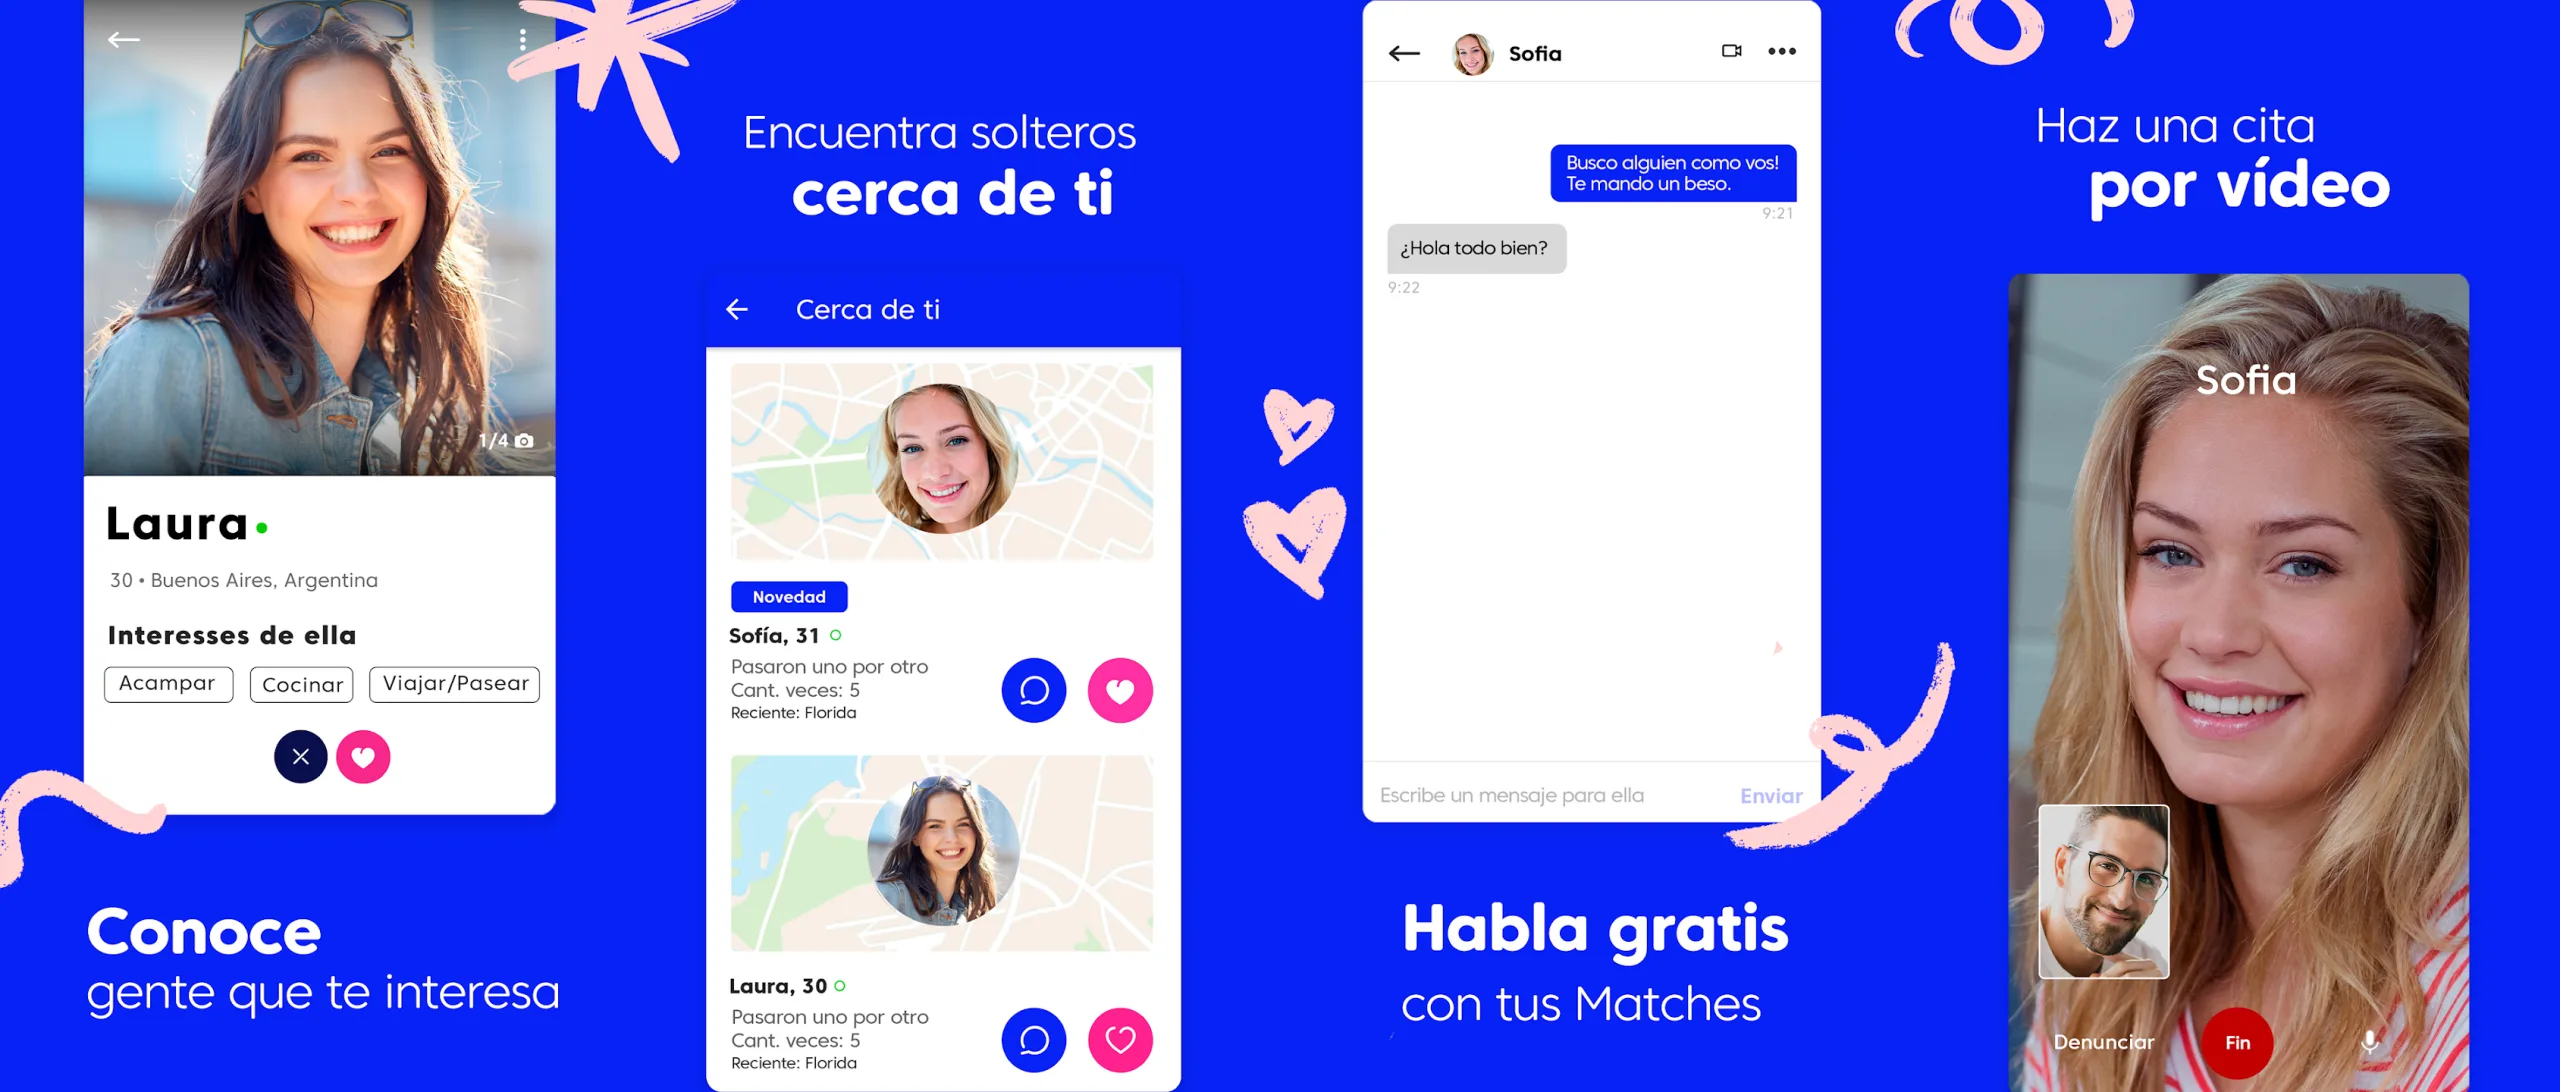 Match Dating App